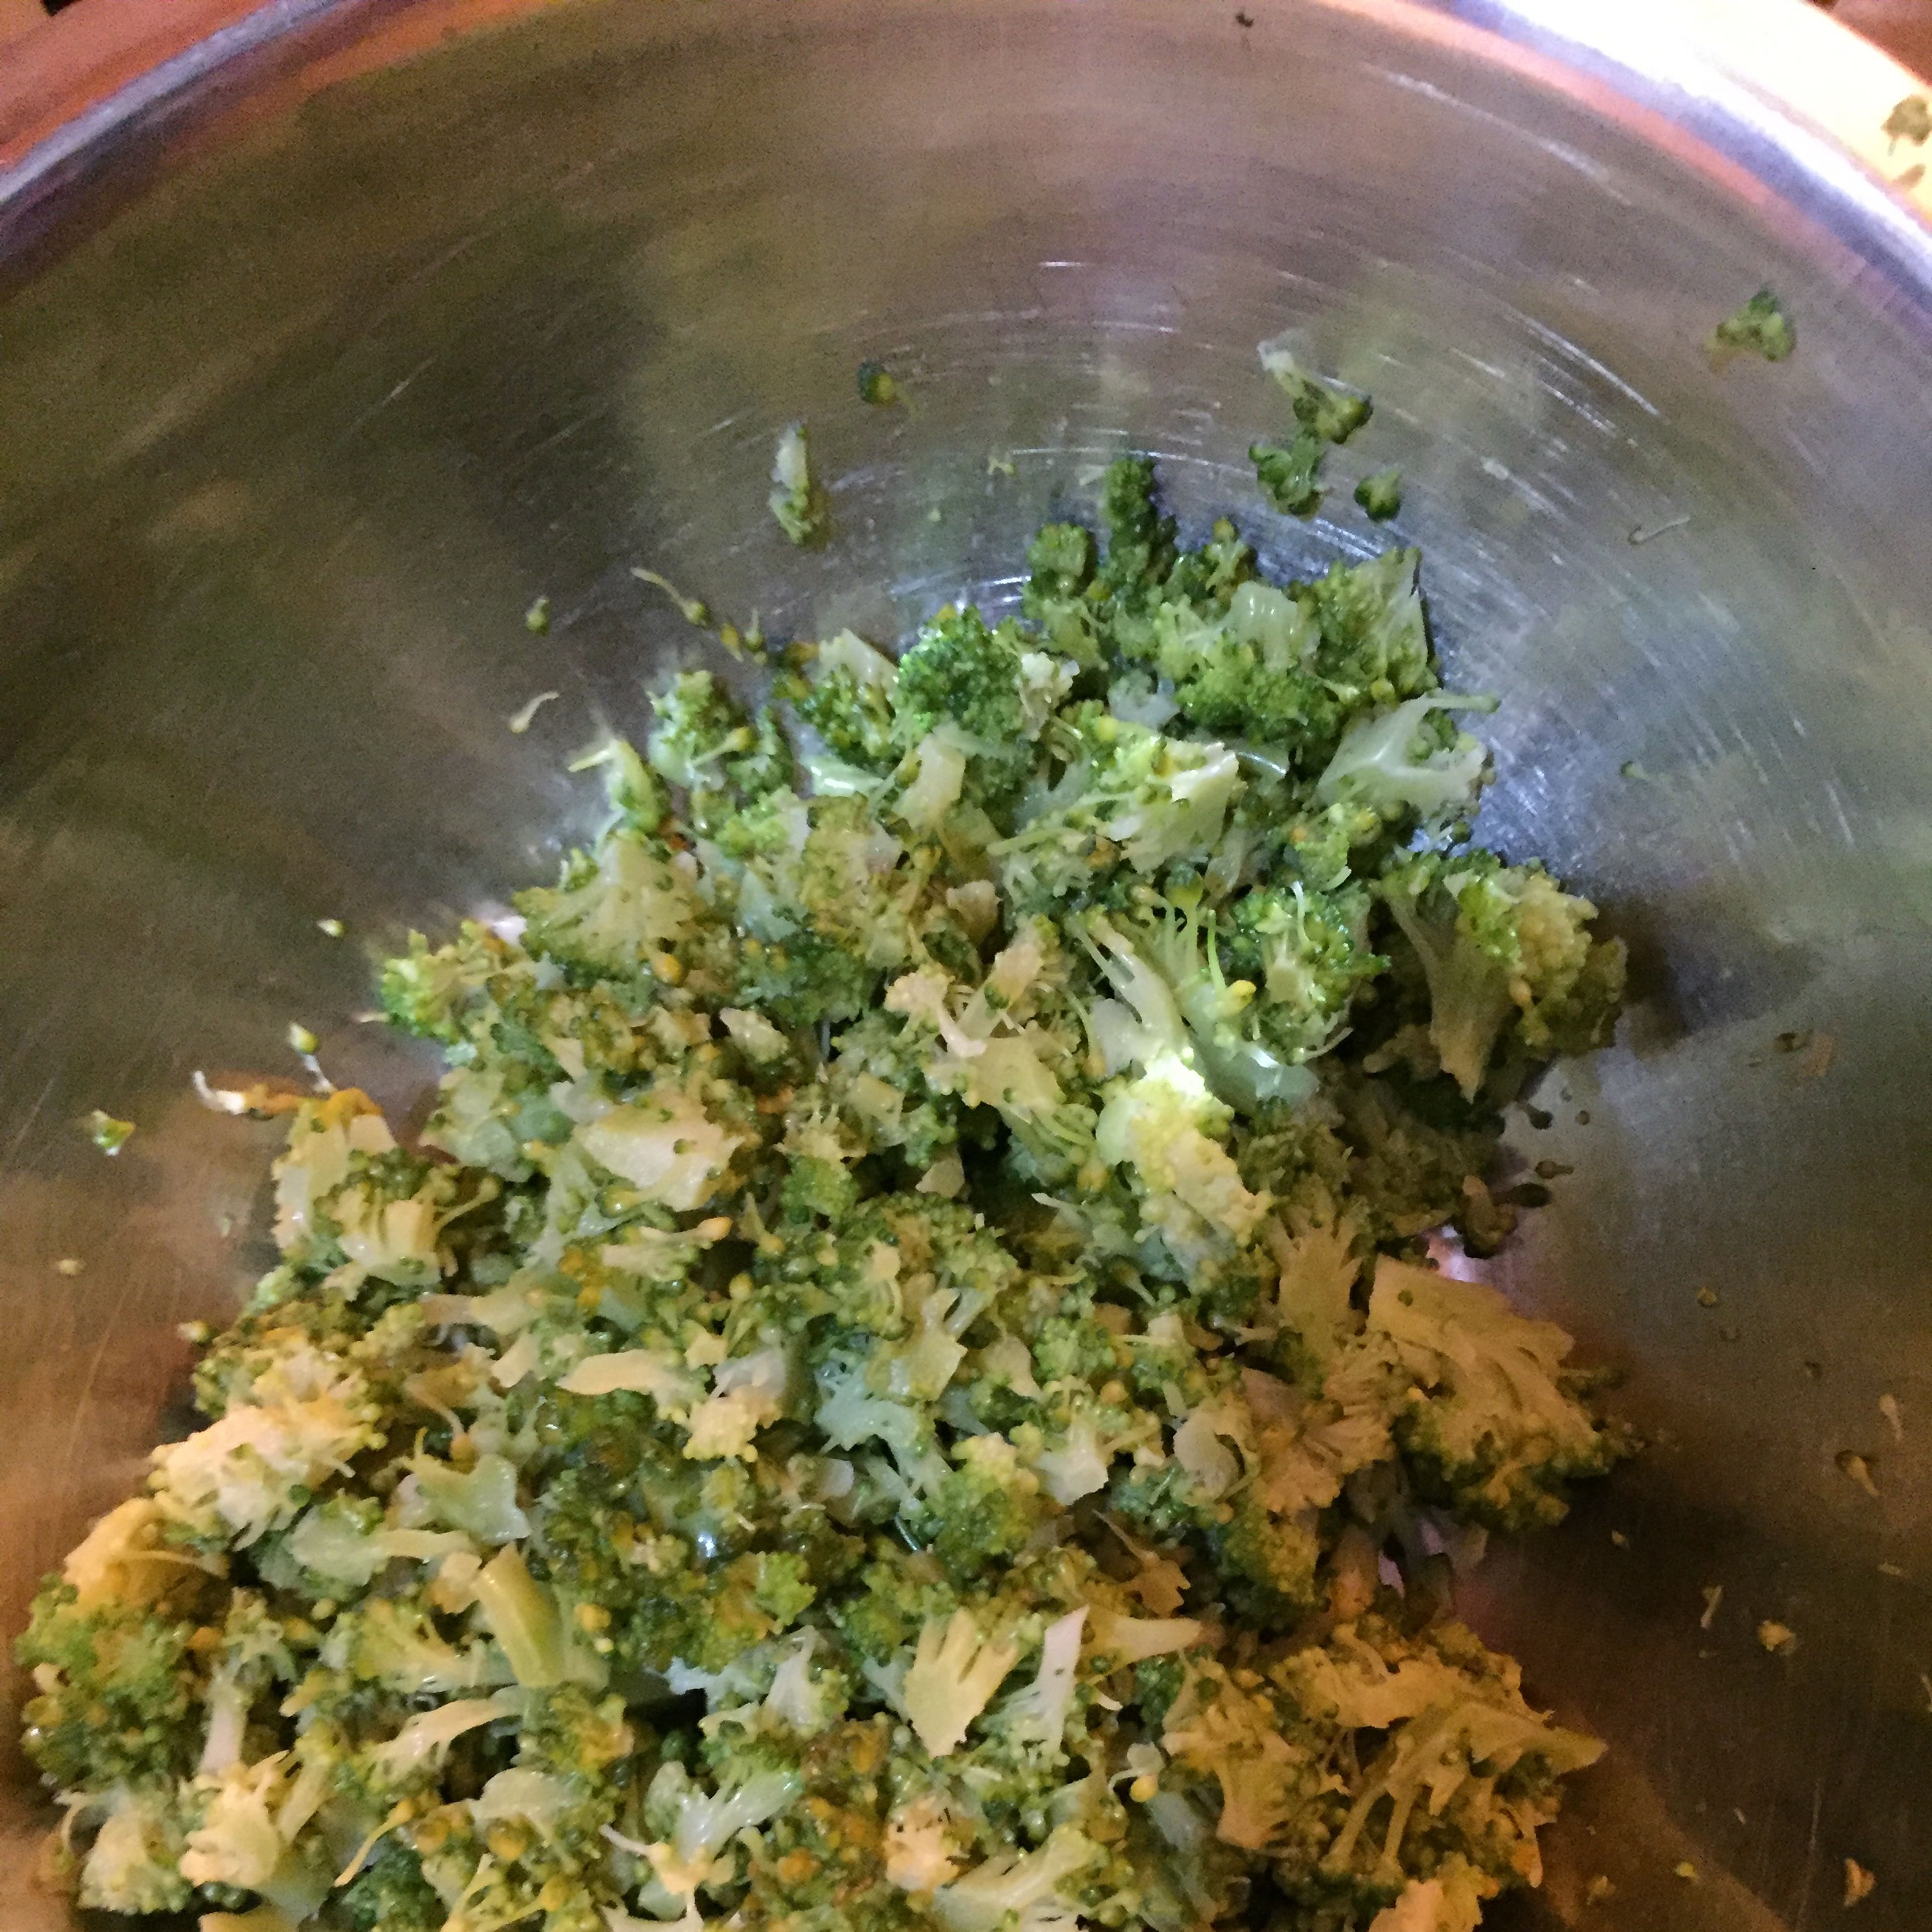 Put the broccoli already chop